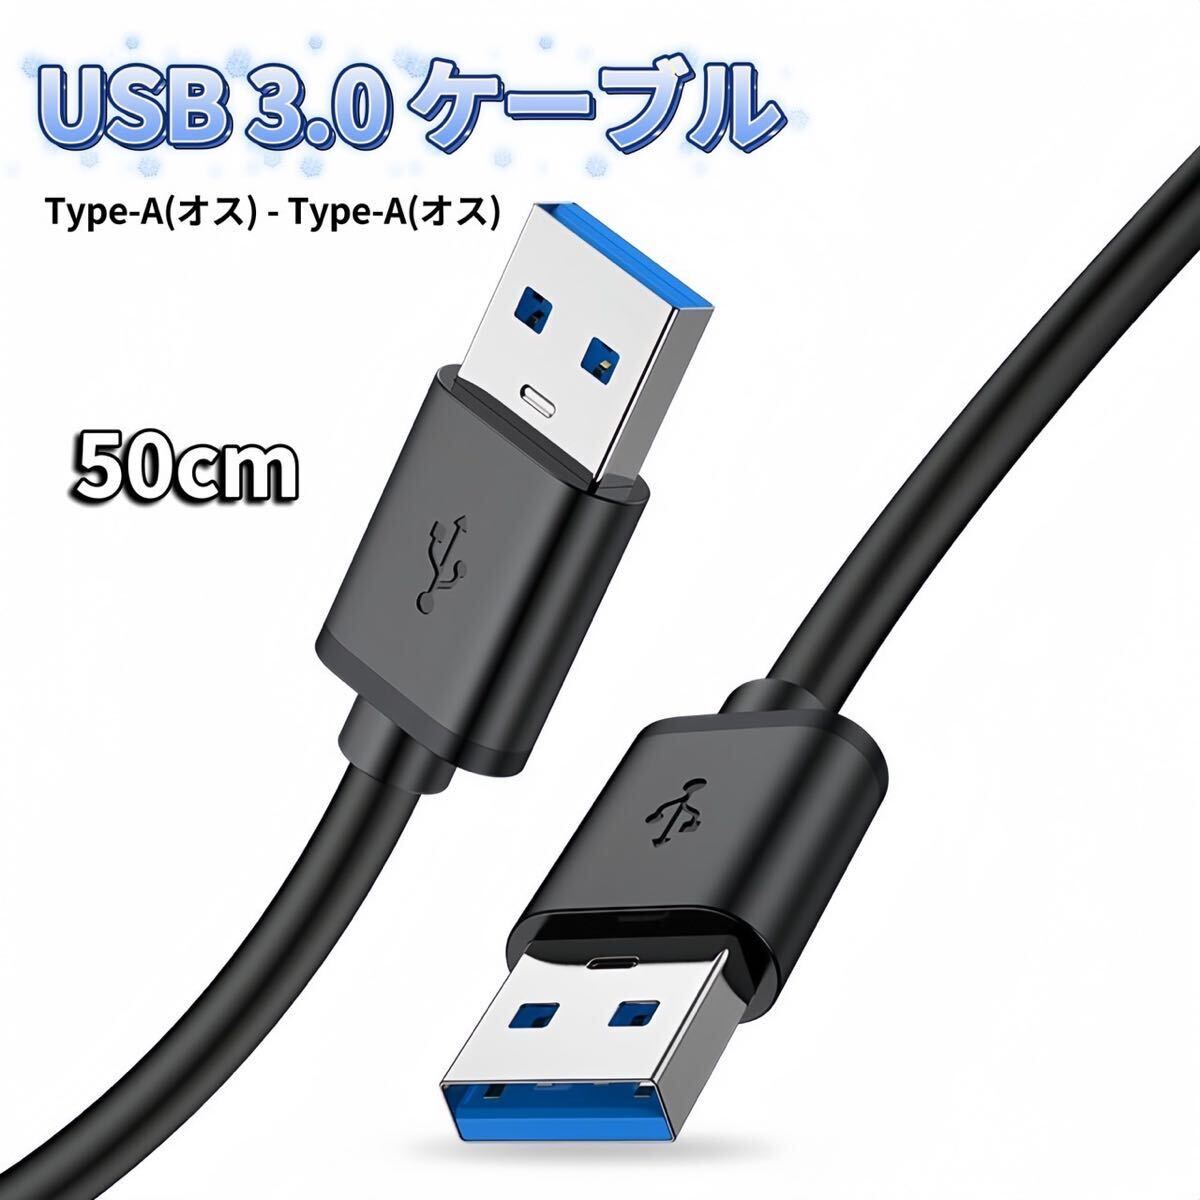 USB オス オス ケーブル USB-A USB-A ケーブル 充電 50cm タイプA-タイプA USB電源ケーブルの画像1